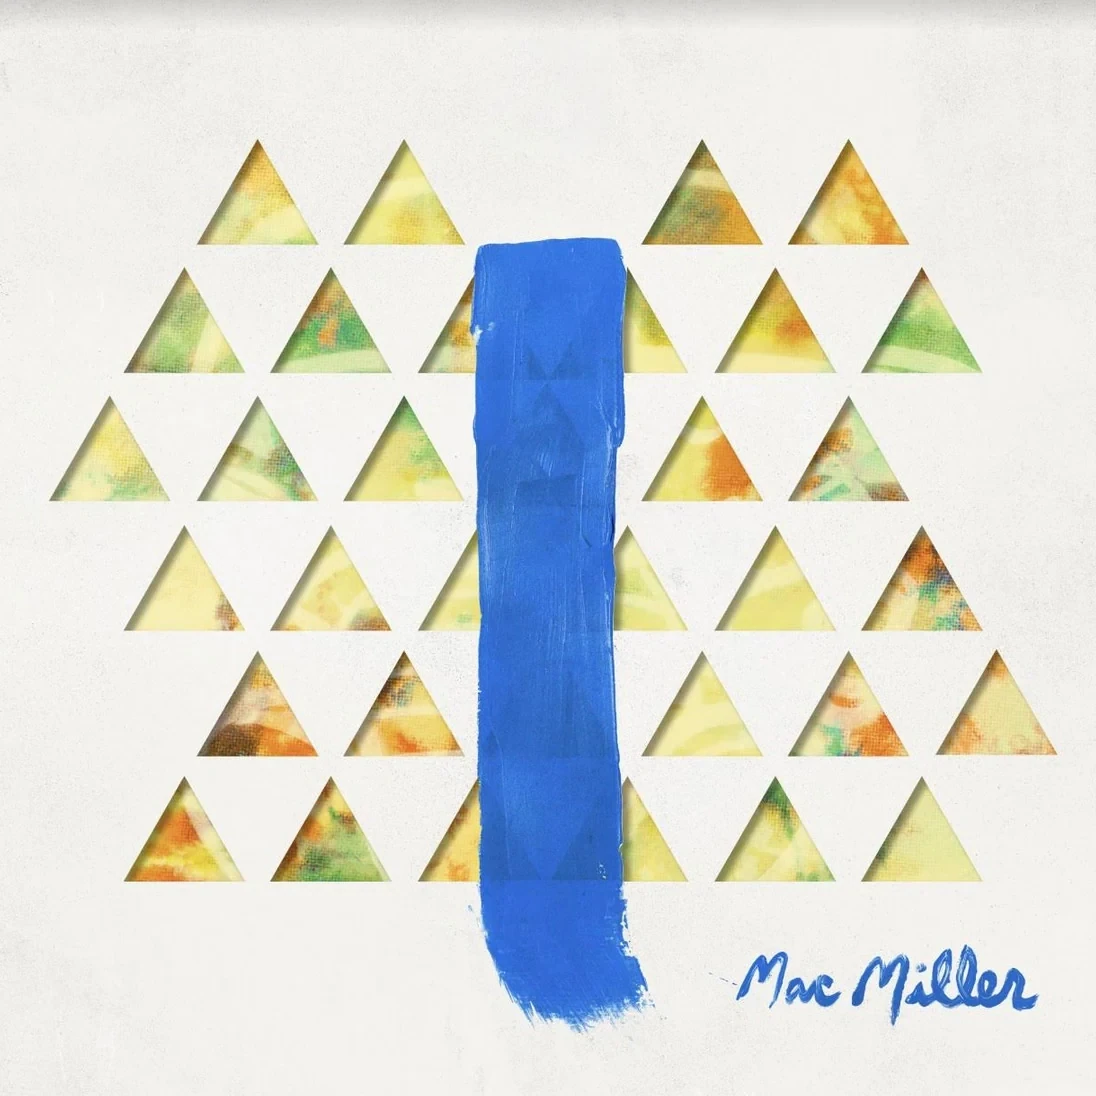 Mac Miller - Blue Slide Park 10th Anniversary Vinyl LP